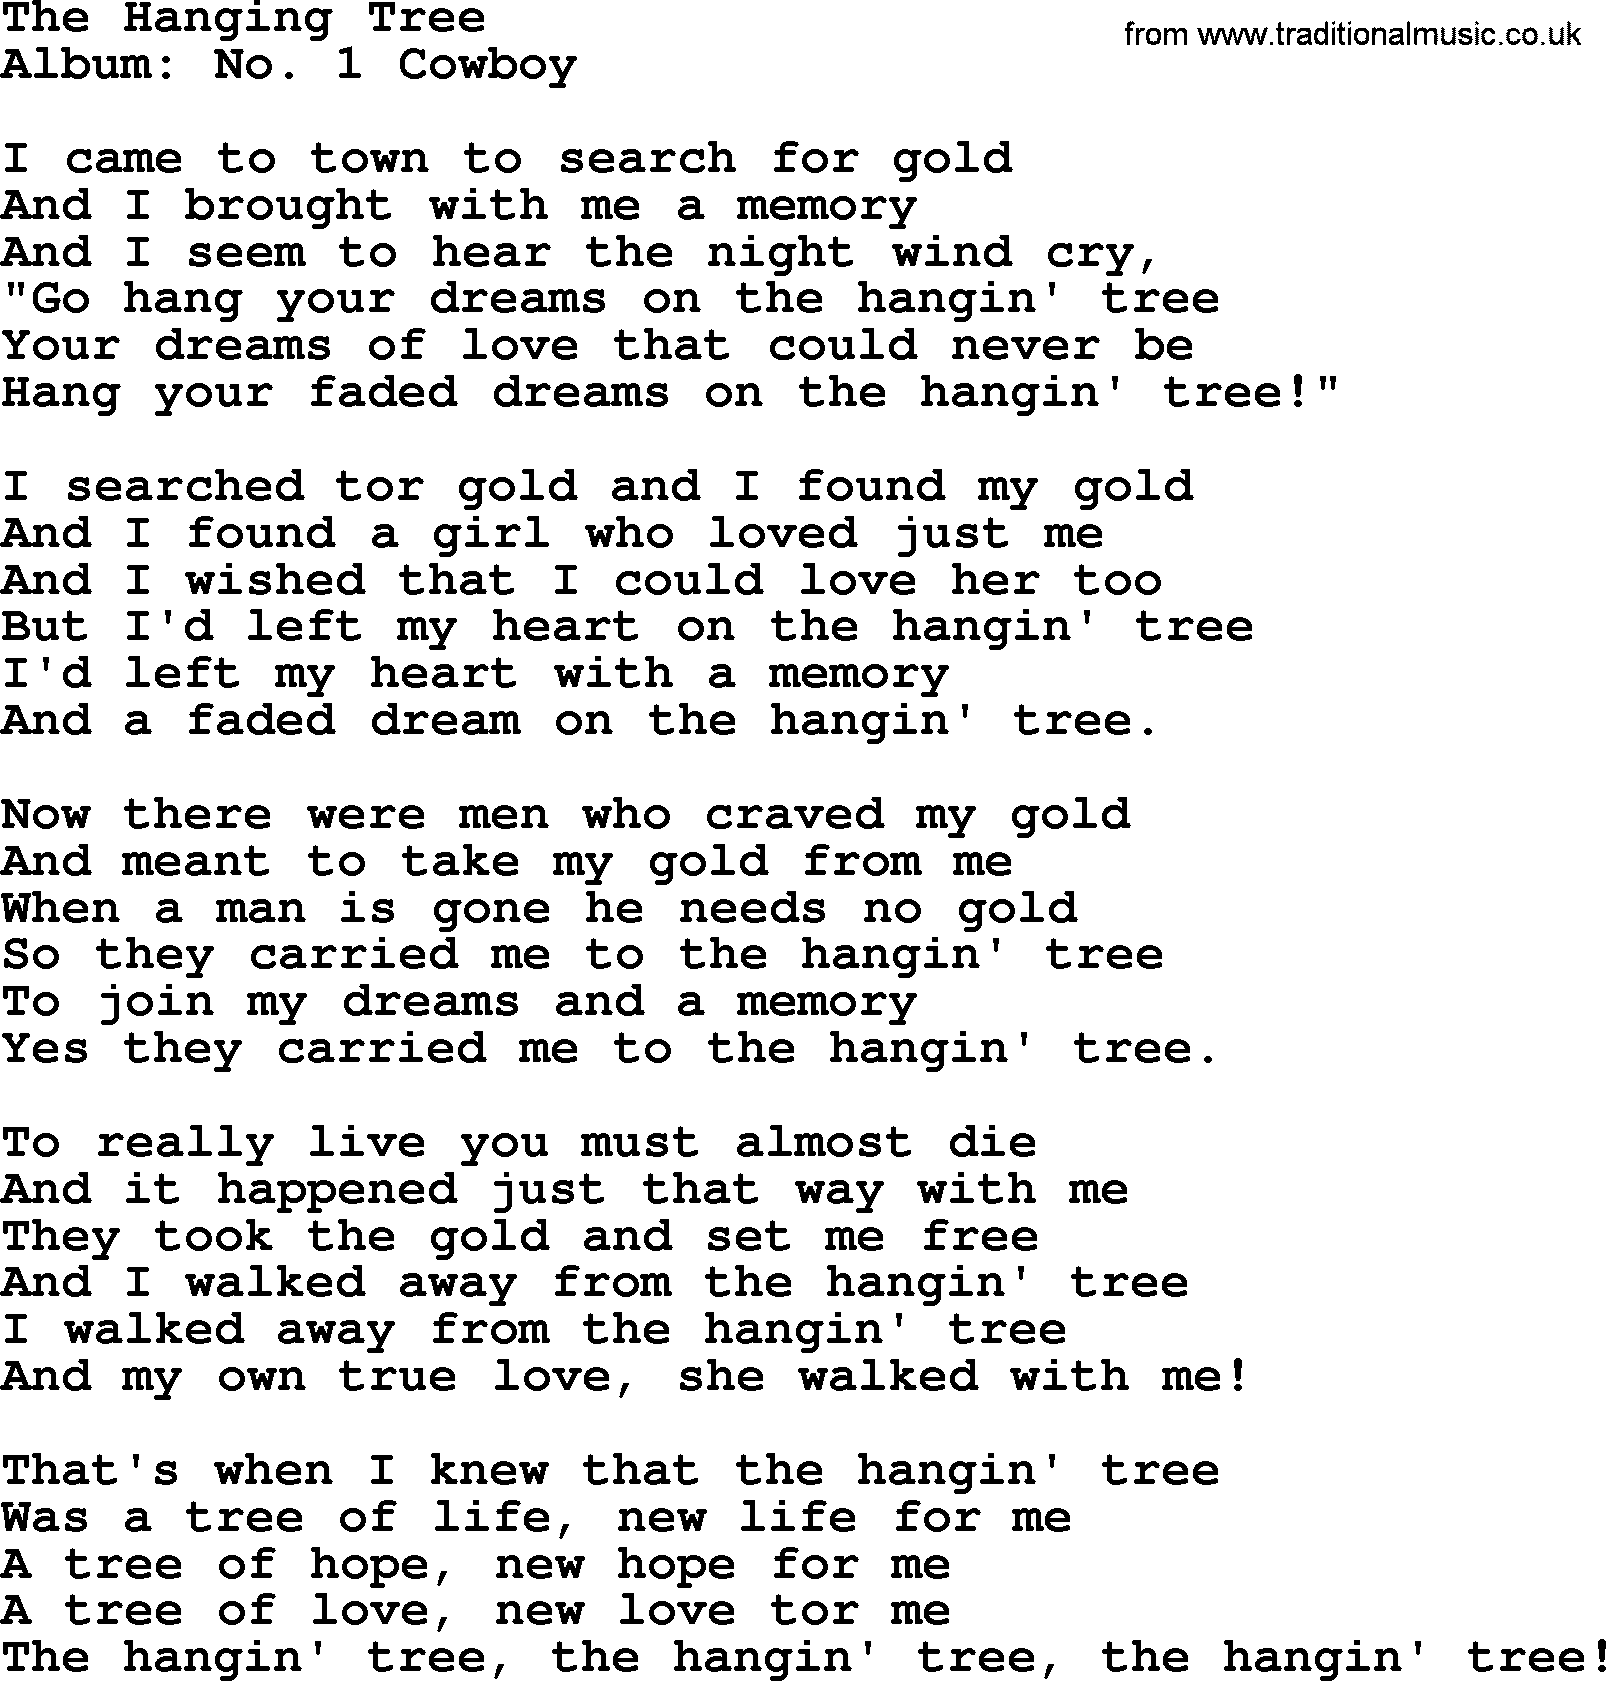 Marty Robbins song: The Hanging Tree, lyrics